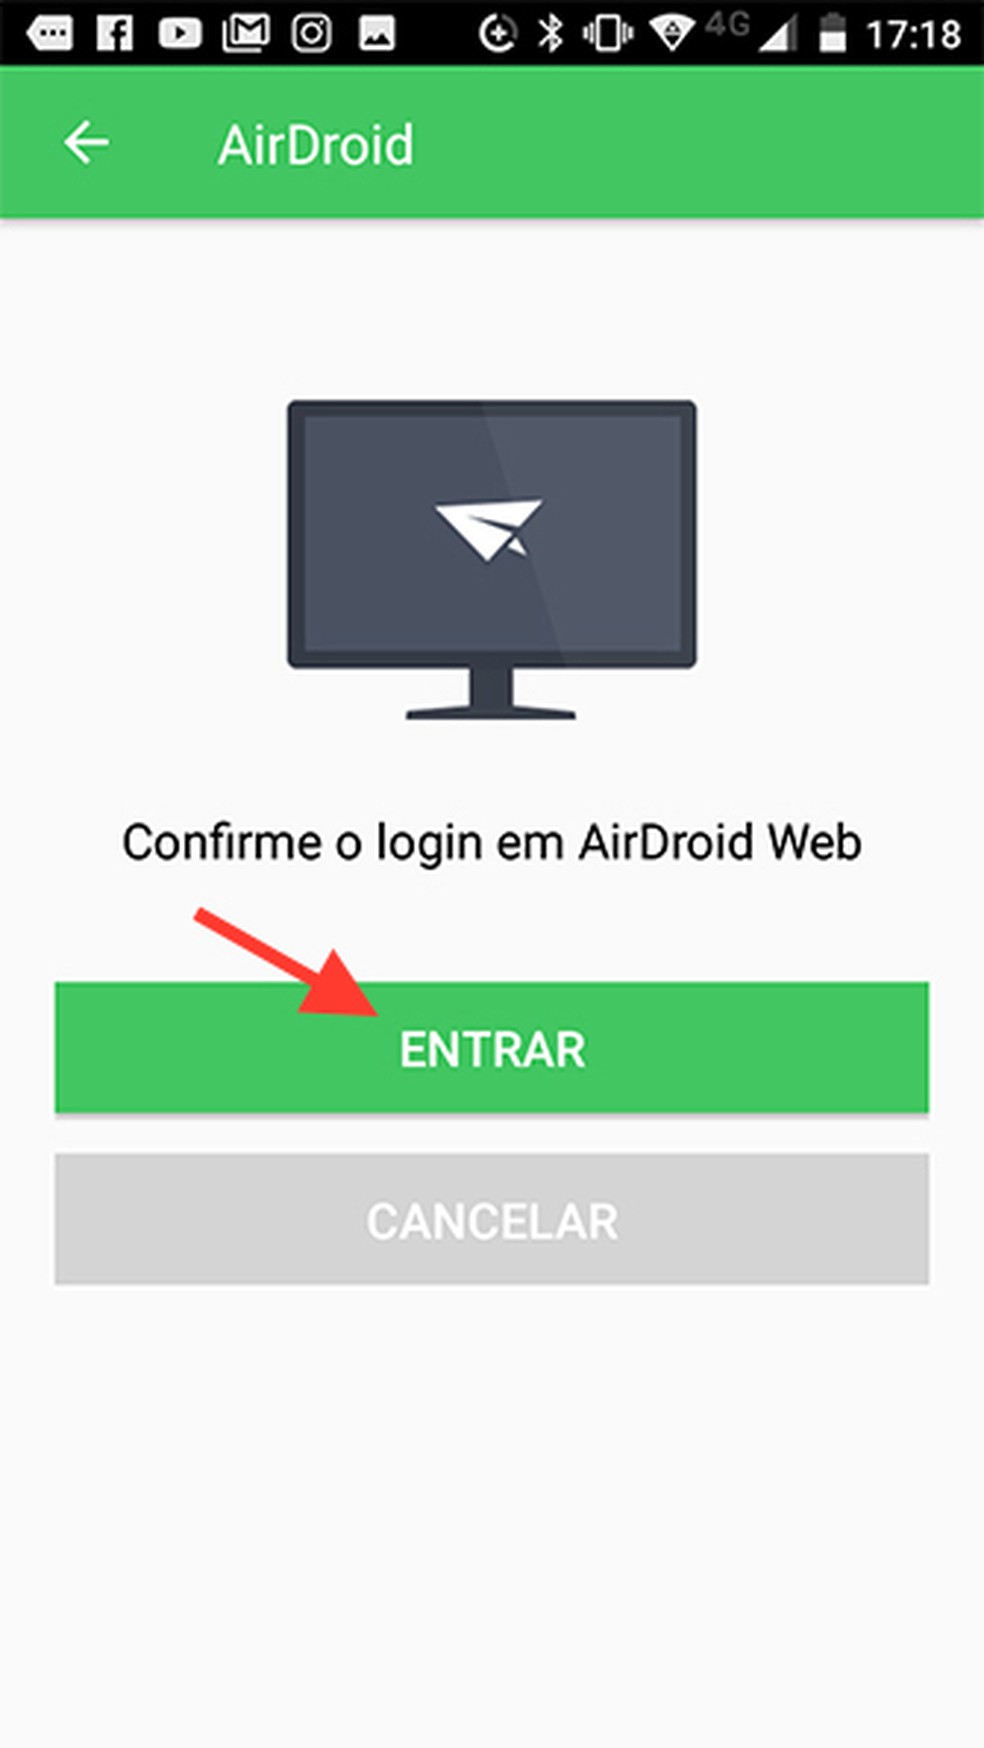 airdroid web login